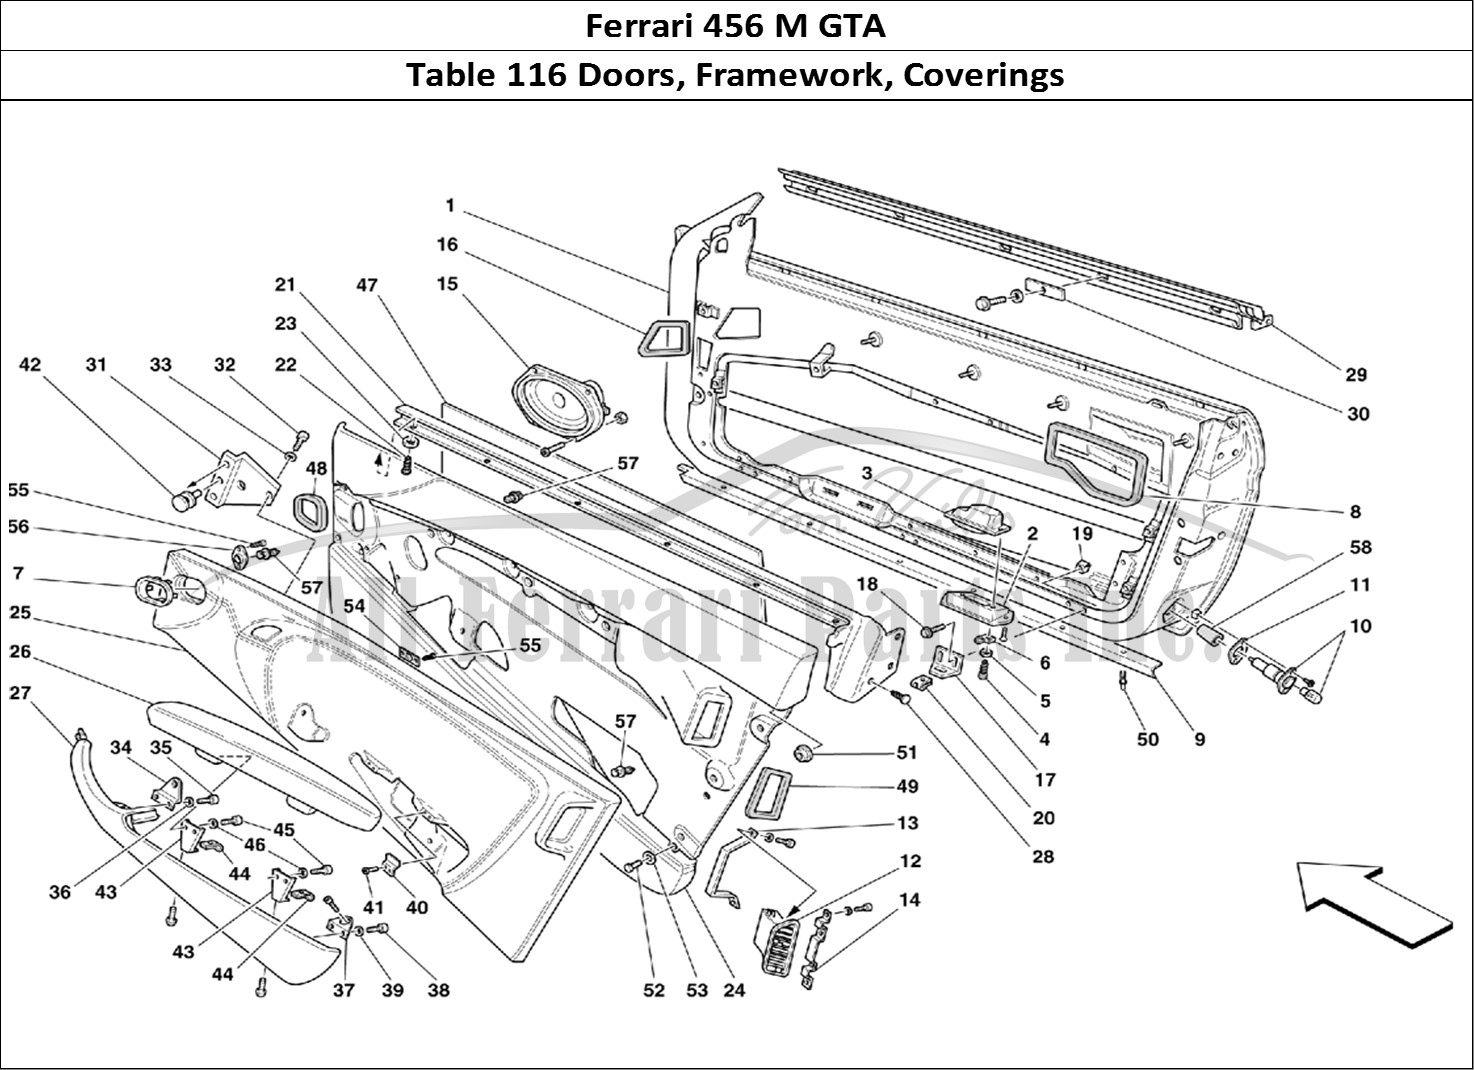 Ferrari Parts Ferrari 456 M GT Page 116 Doors - Framework and Cov